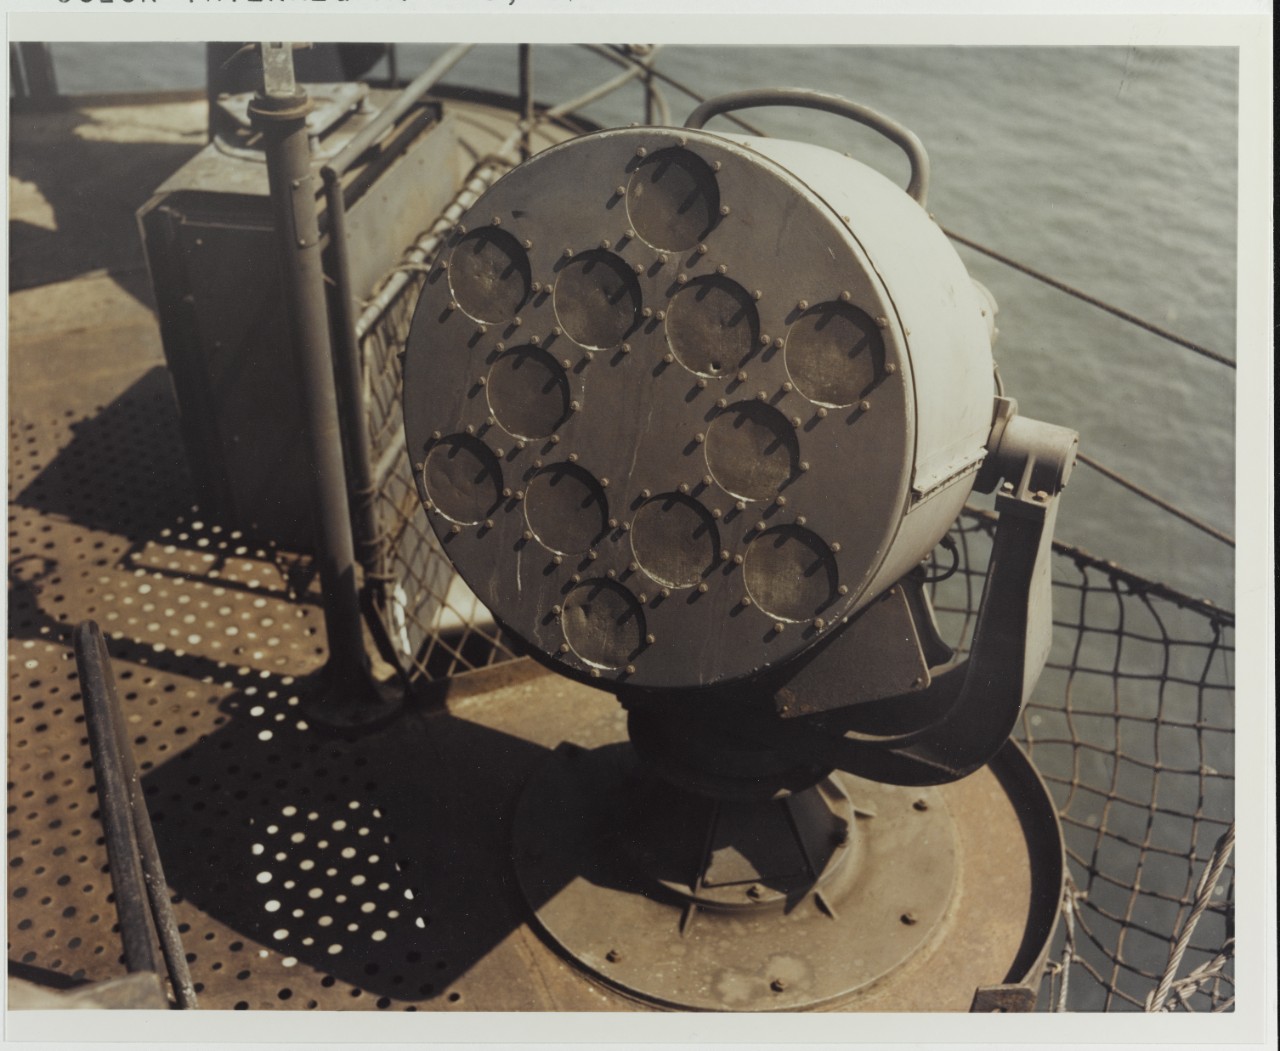 Loudspeakers on flight deck of a training escort carrier, circa 1943-1945